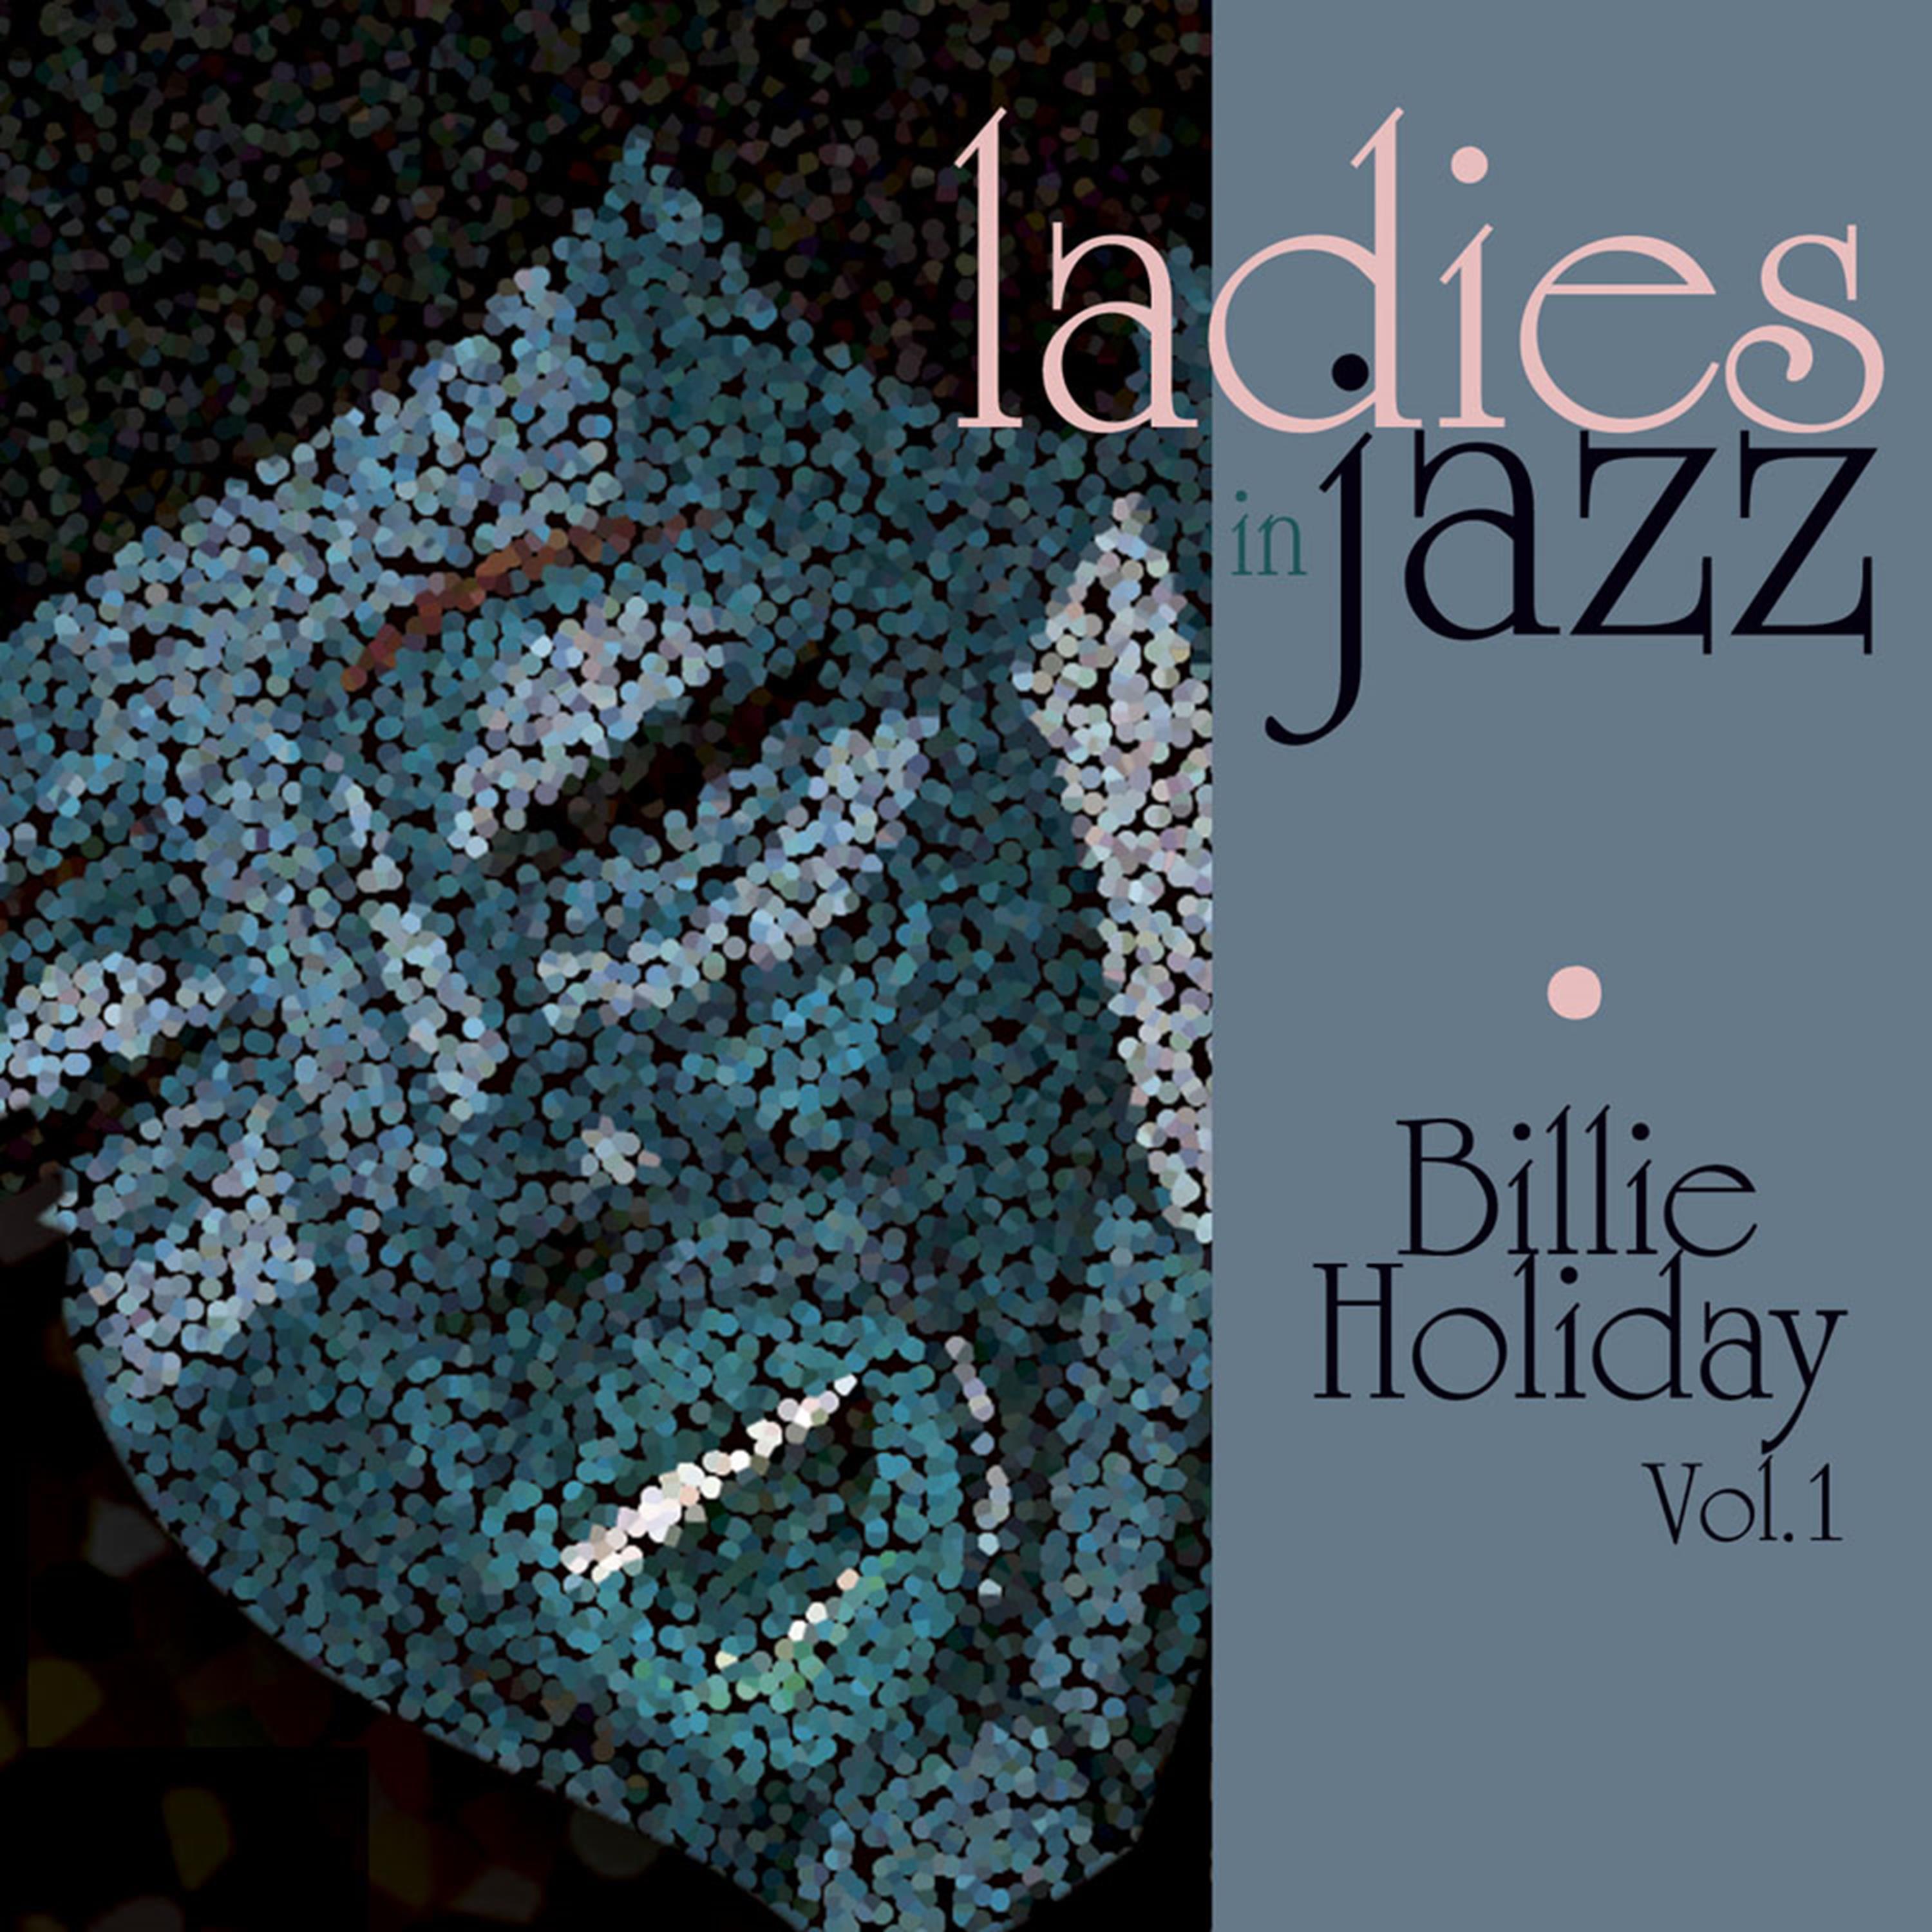 Ladies in Jazz - Billie Holiday, Vol. 1